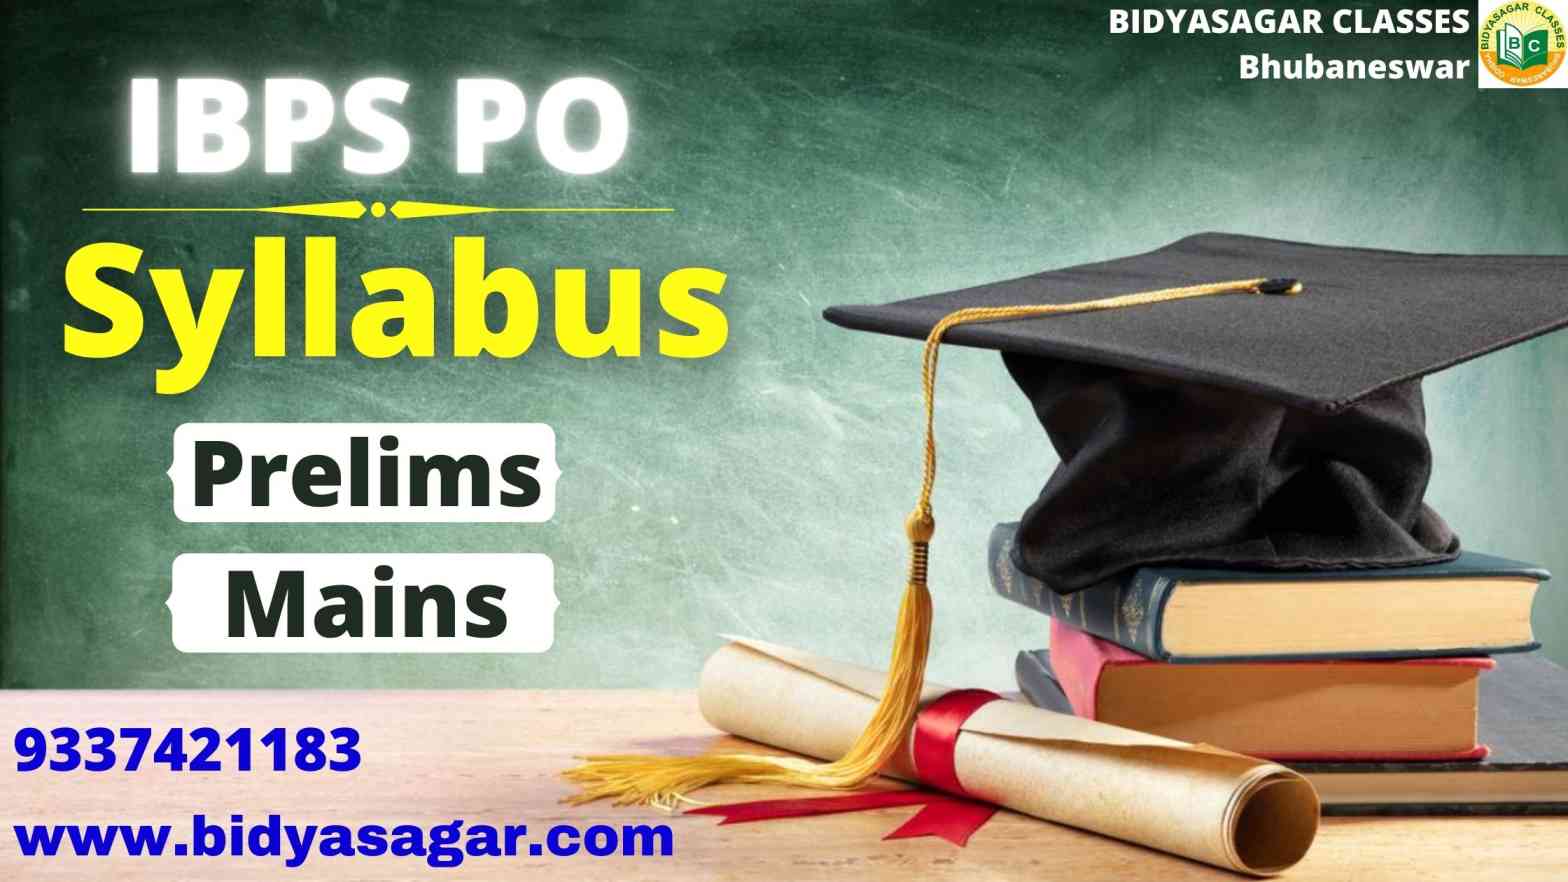 IBPS PO 2021 Exam Syllabus